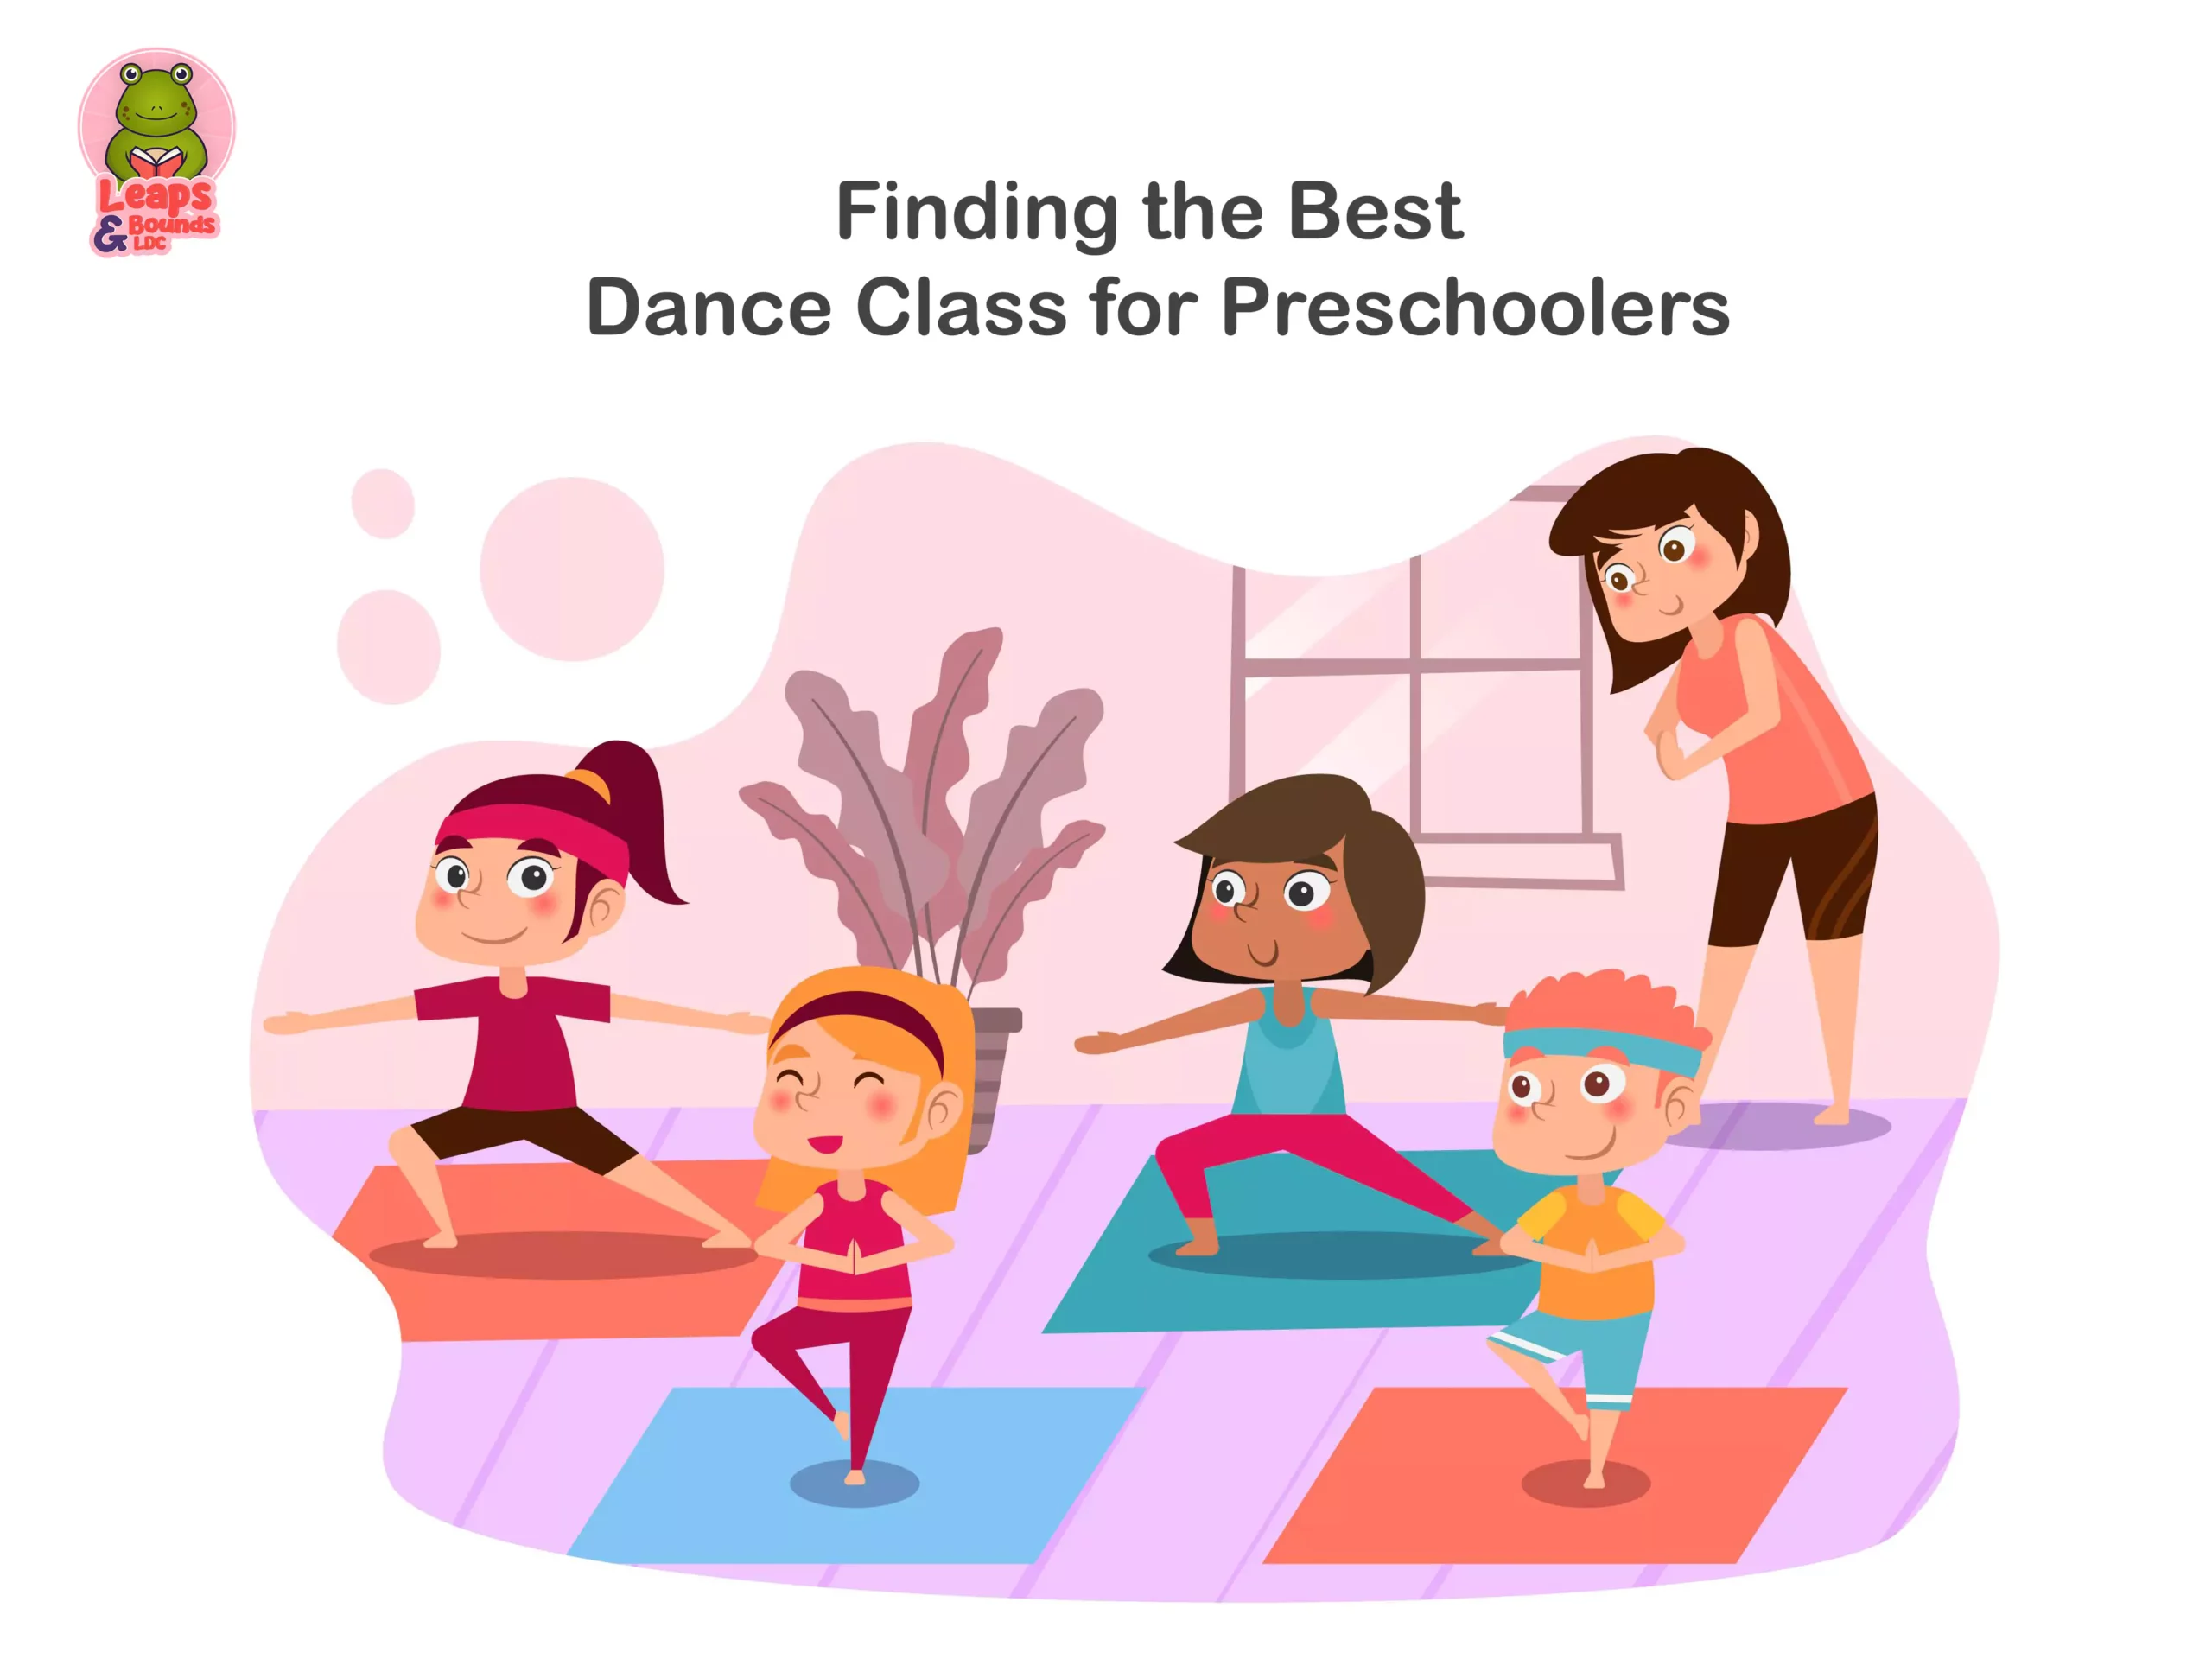 Finding the Best Dance Class for Preschoolers